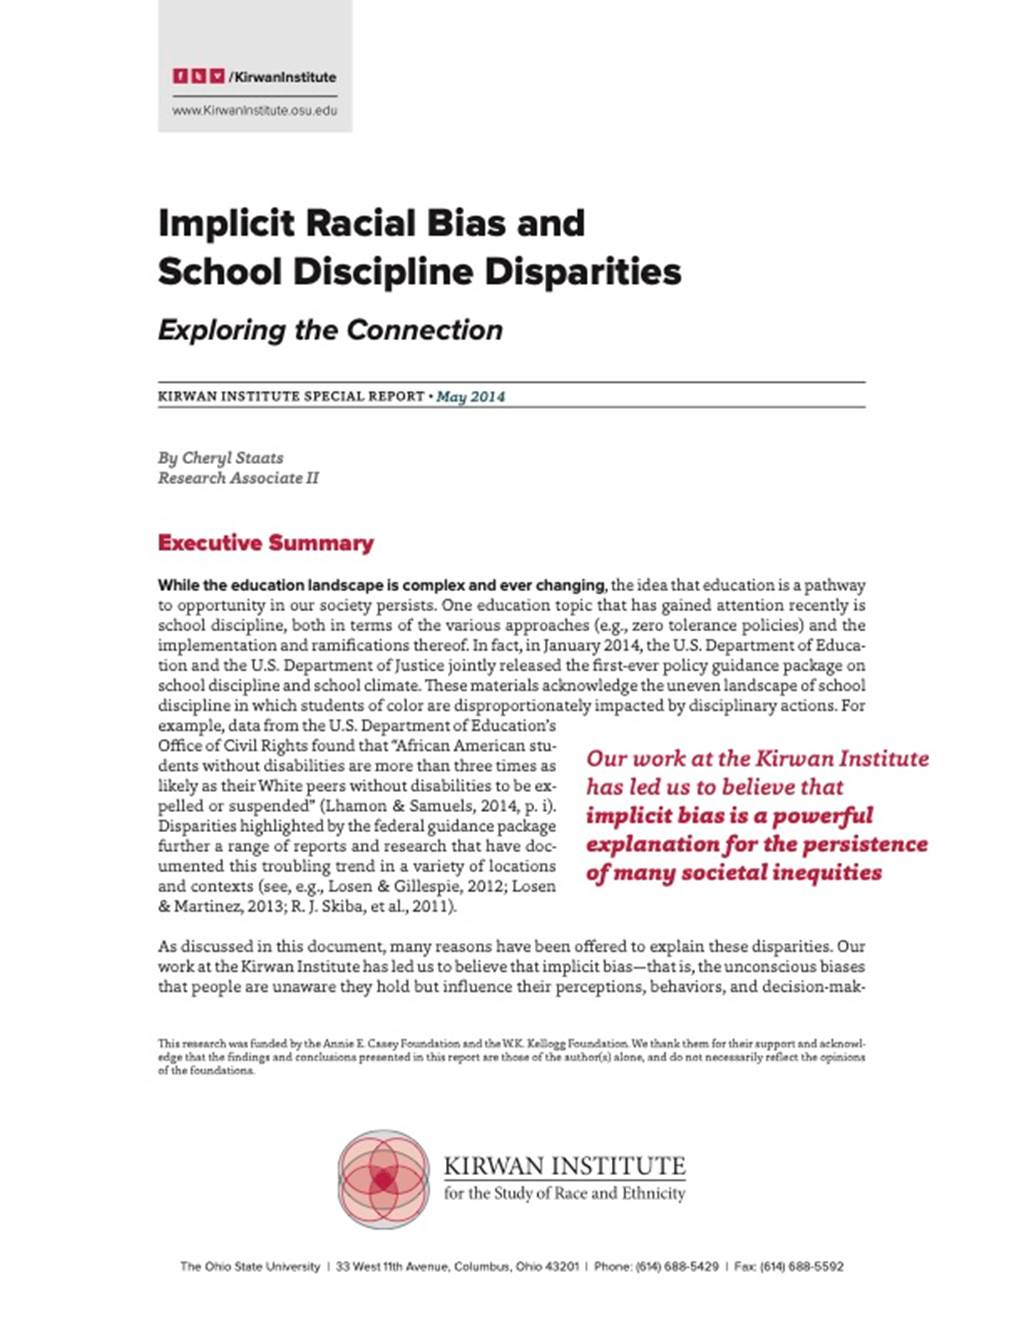 Implicit Racial Bias and School Discipline Disparities - image